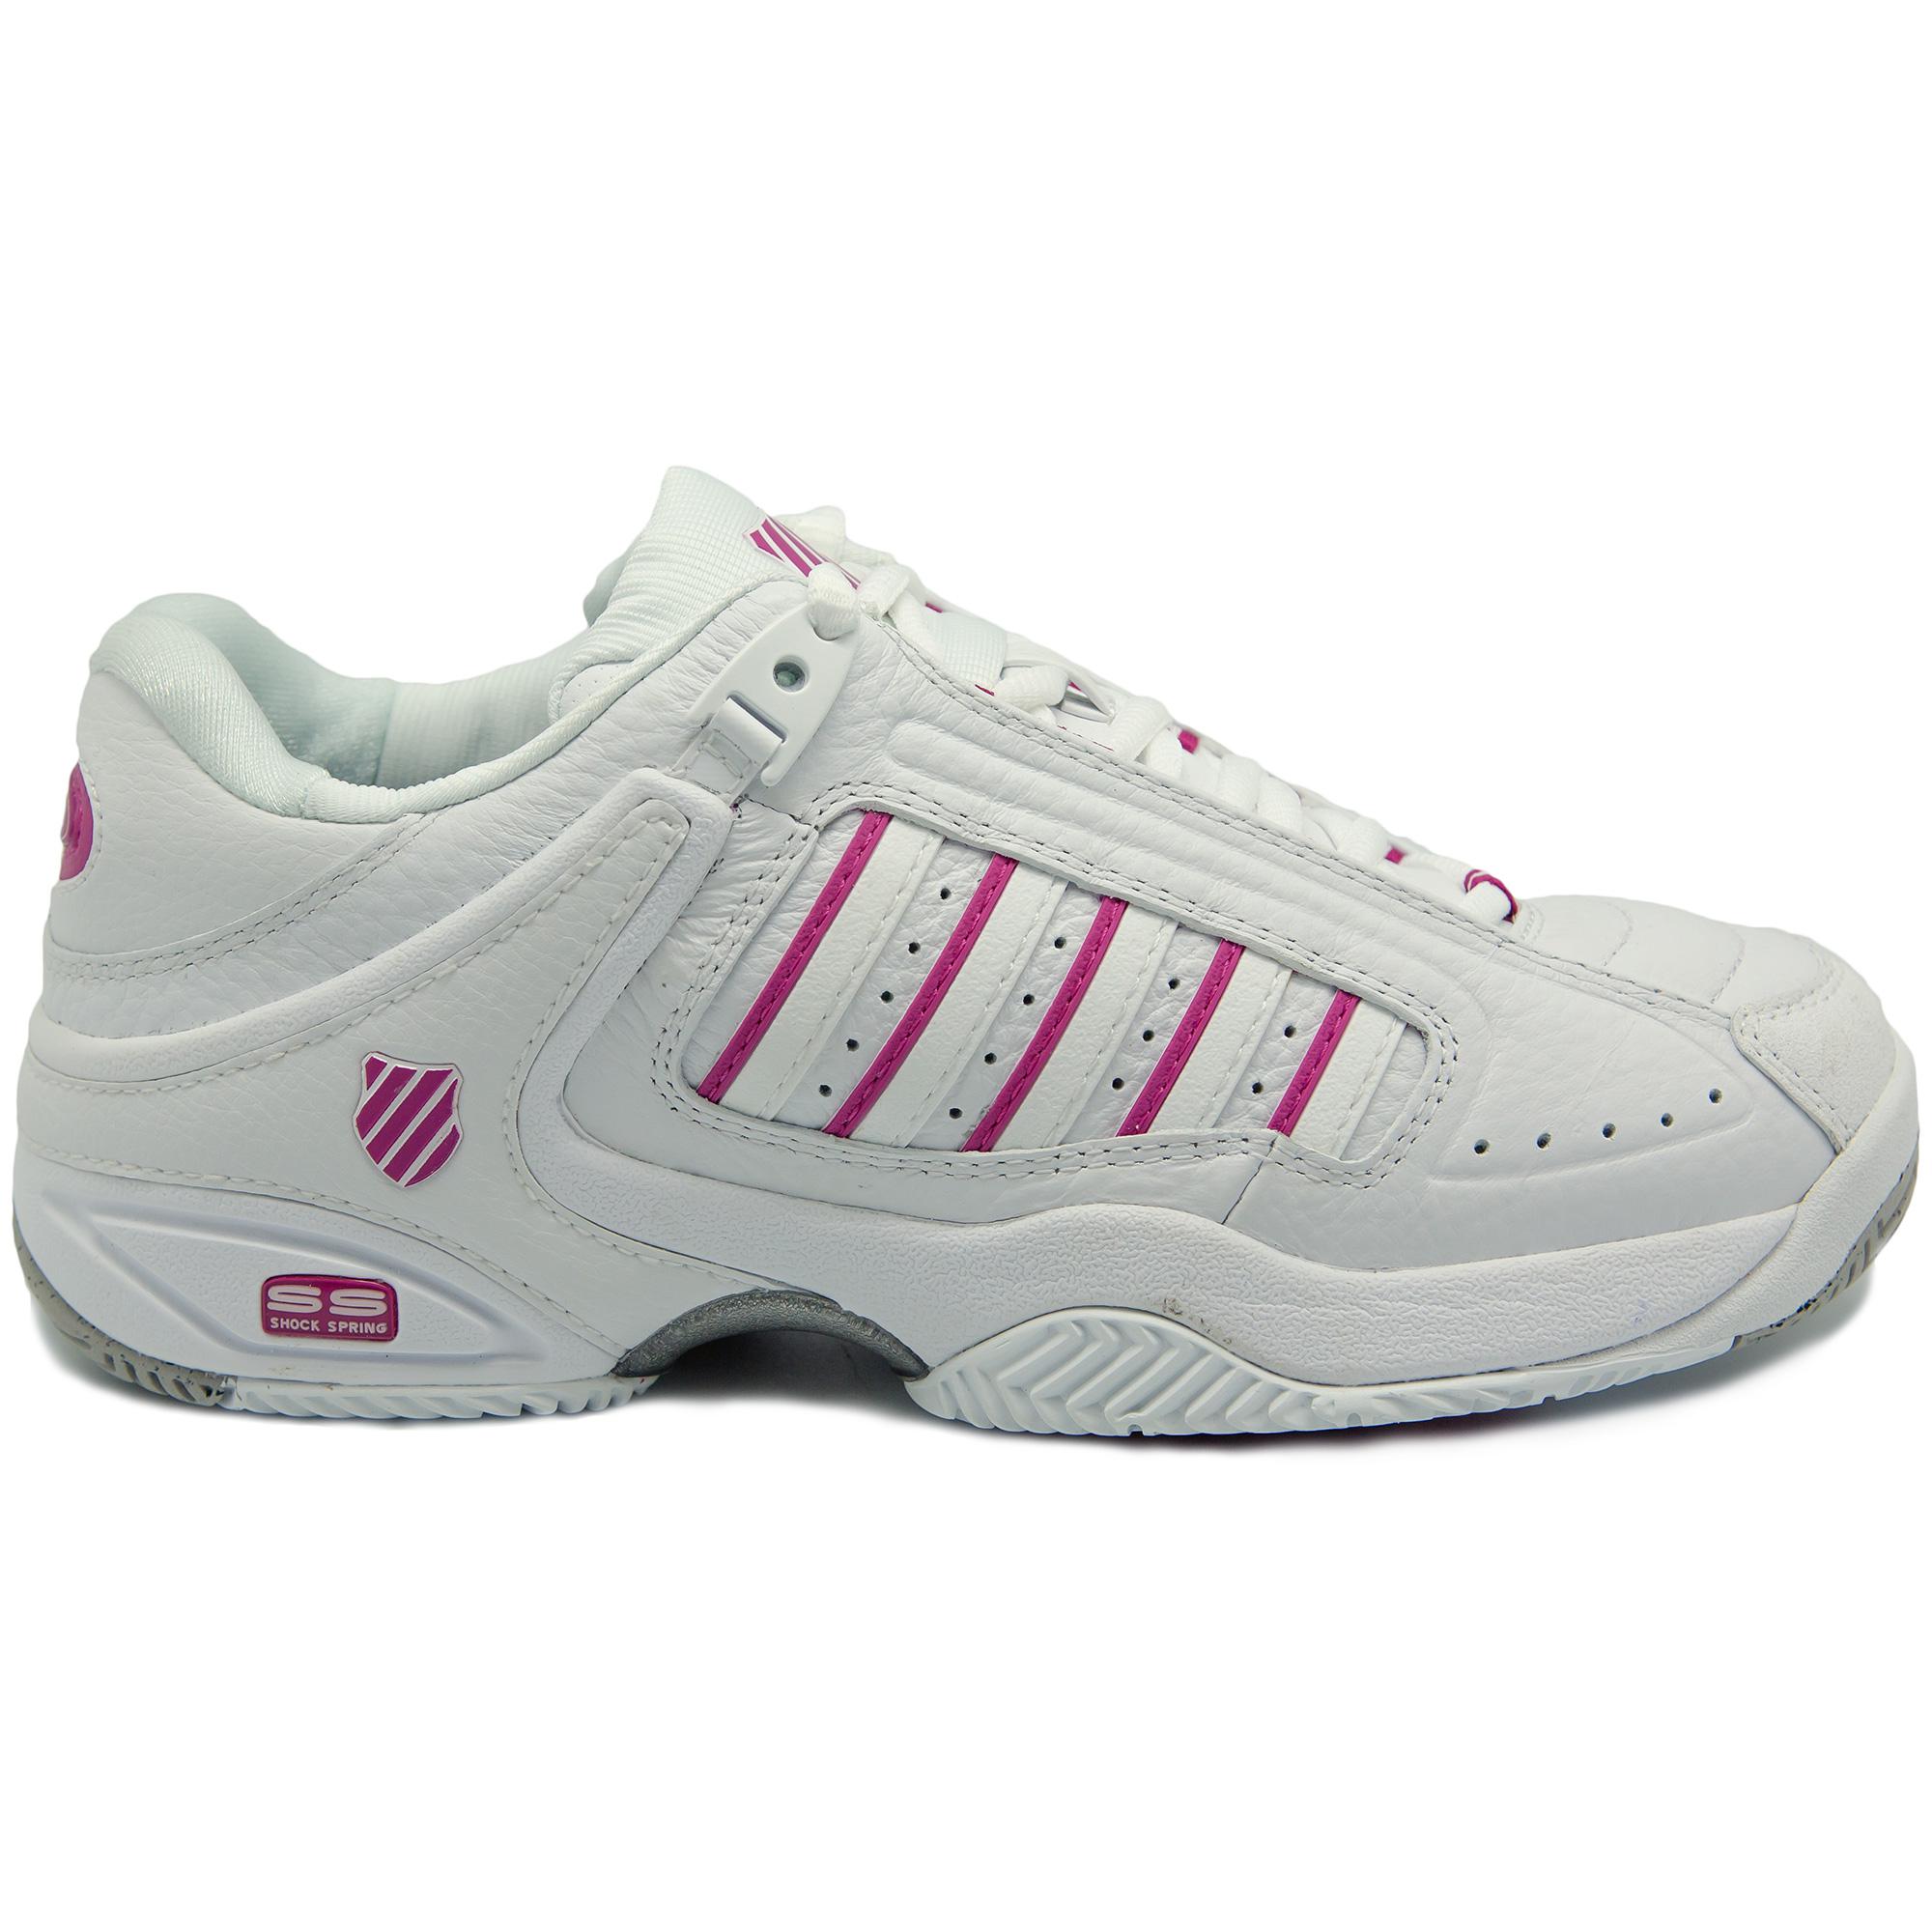 pink k swiss tennis shoes